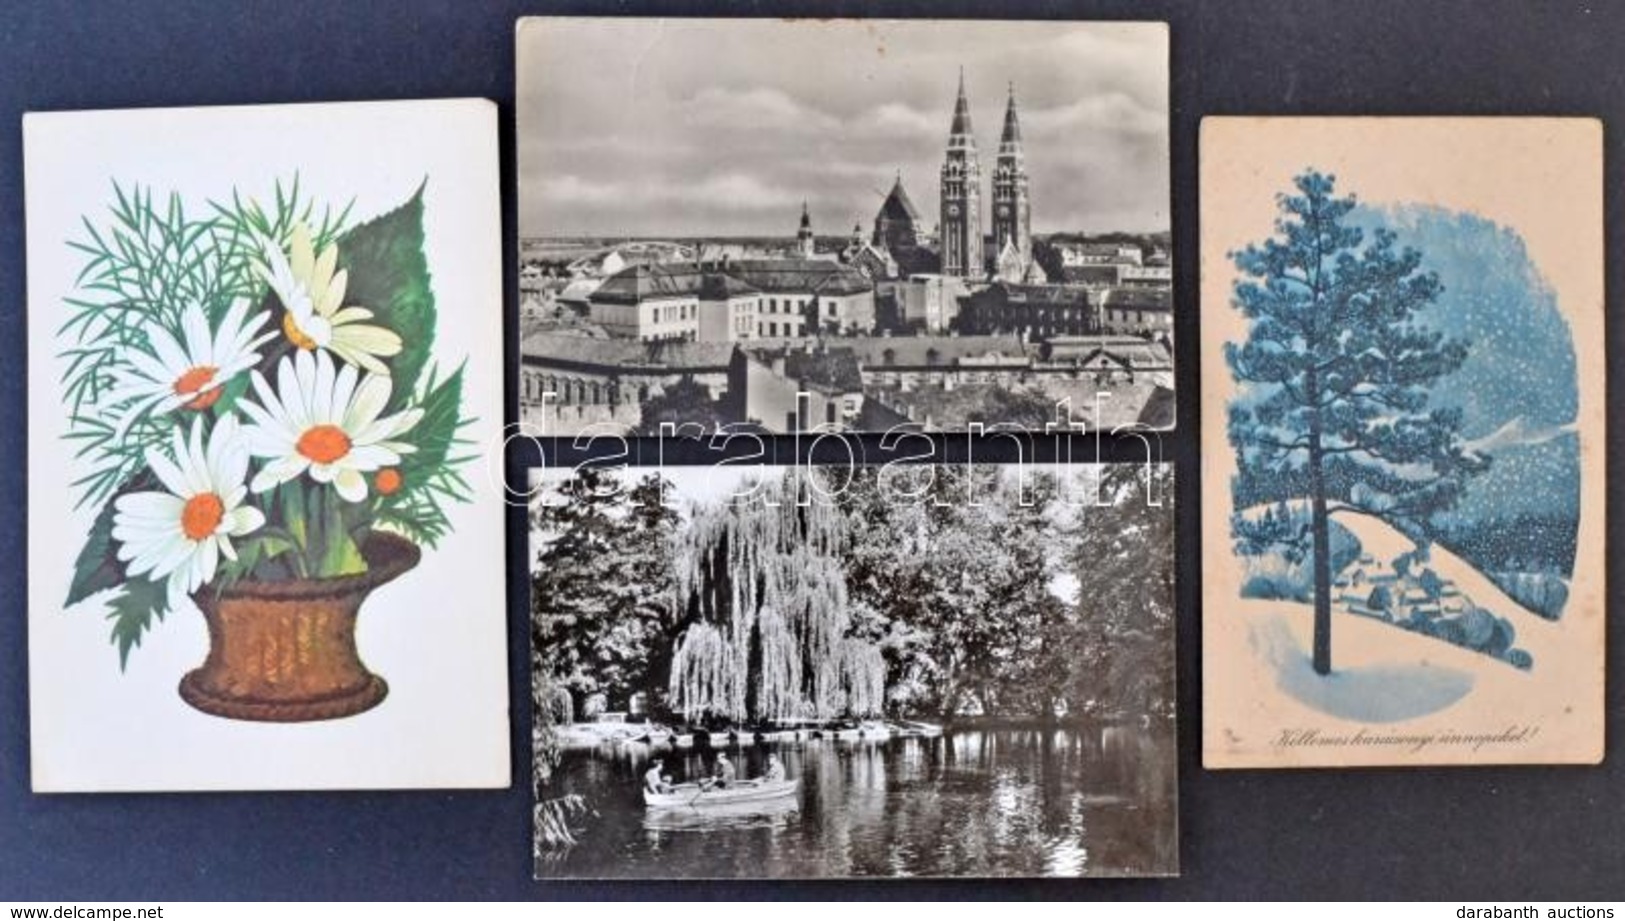 ** * 156 Db Modern Magyar Városképes Lap és Motívumlapok / 156 Modern Hungarian Town-view Postcards And Motive Cards - Unclassified